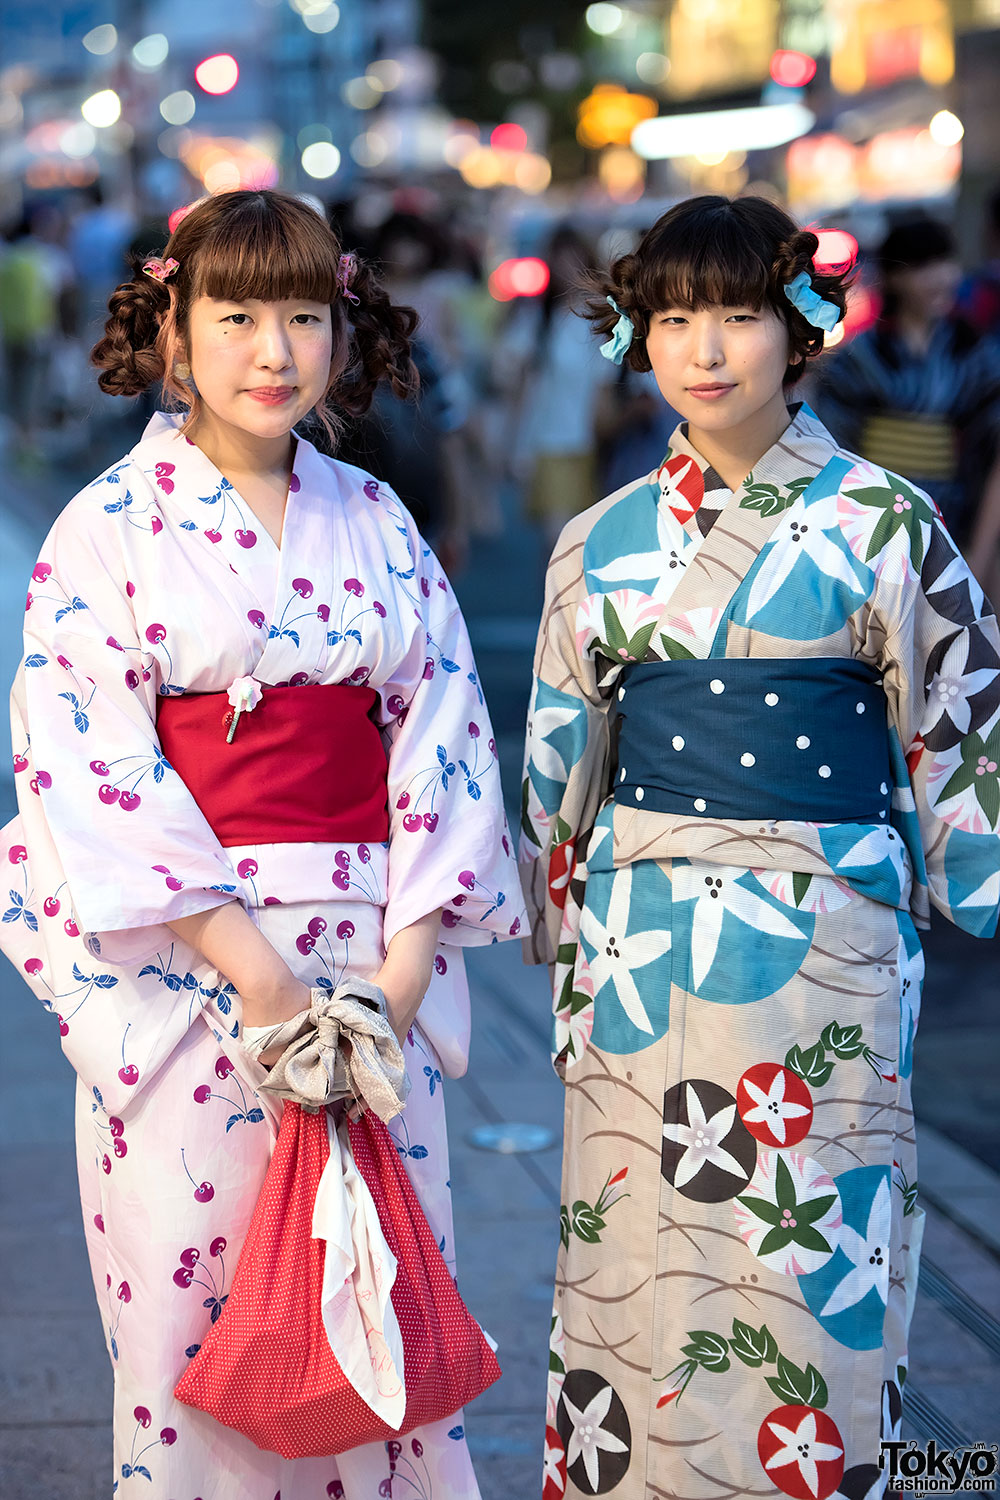 Japanese Yukata Pictures in Harajuku at Jingu Gaien Fireworks Festival